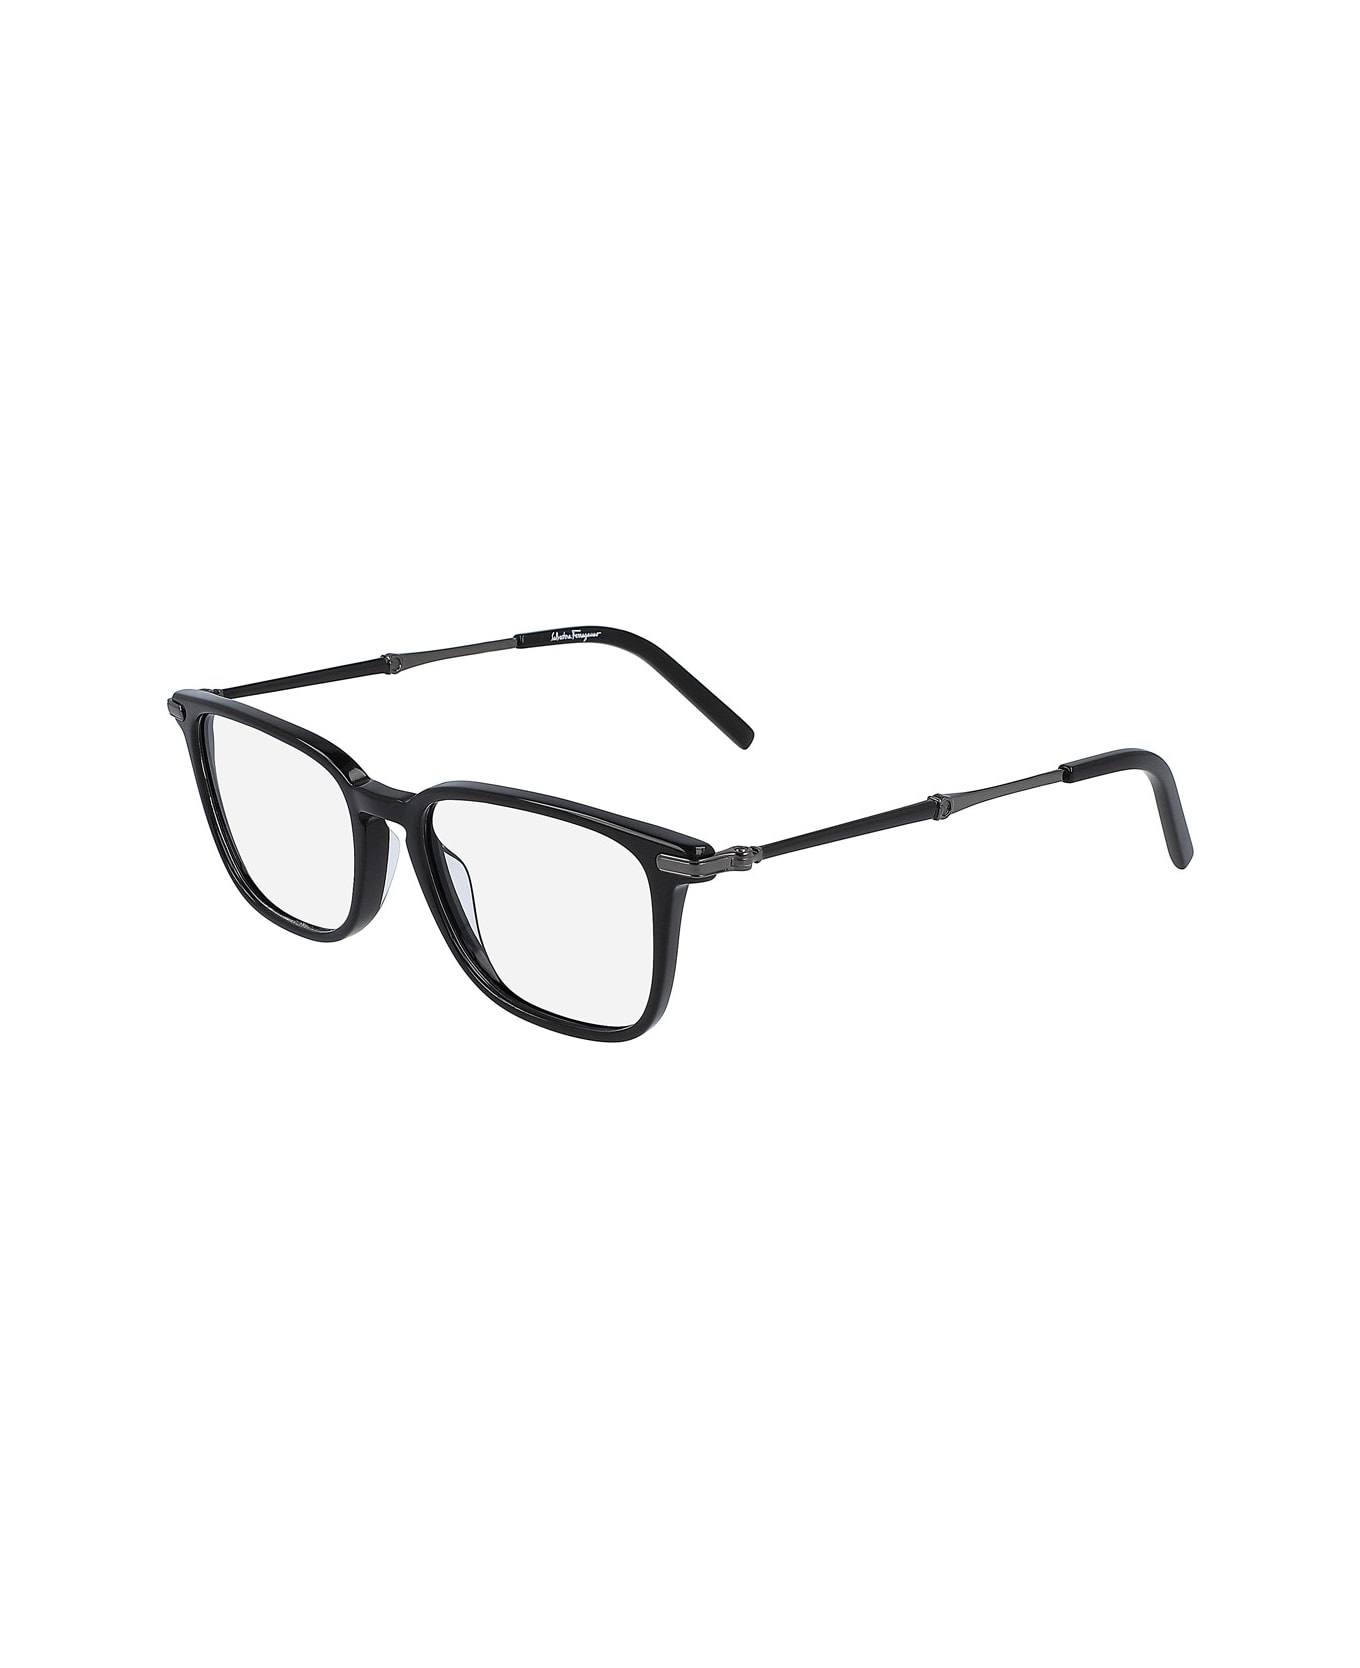 Salvatore Ferragamo Eyewear Sf2861 Glasses - Nero